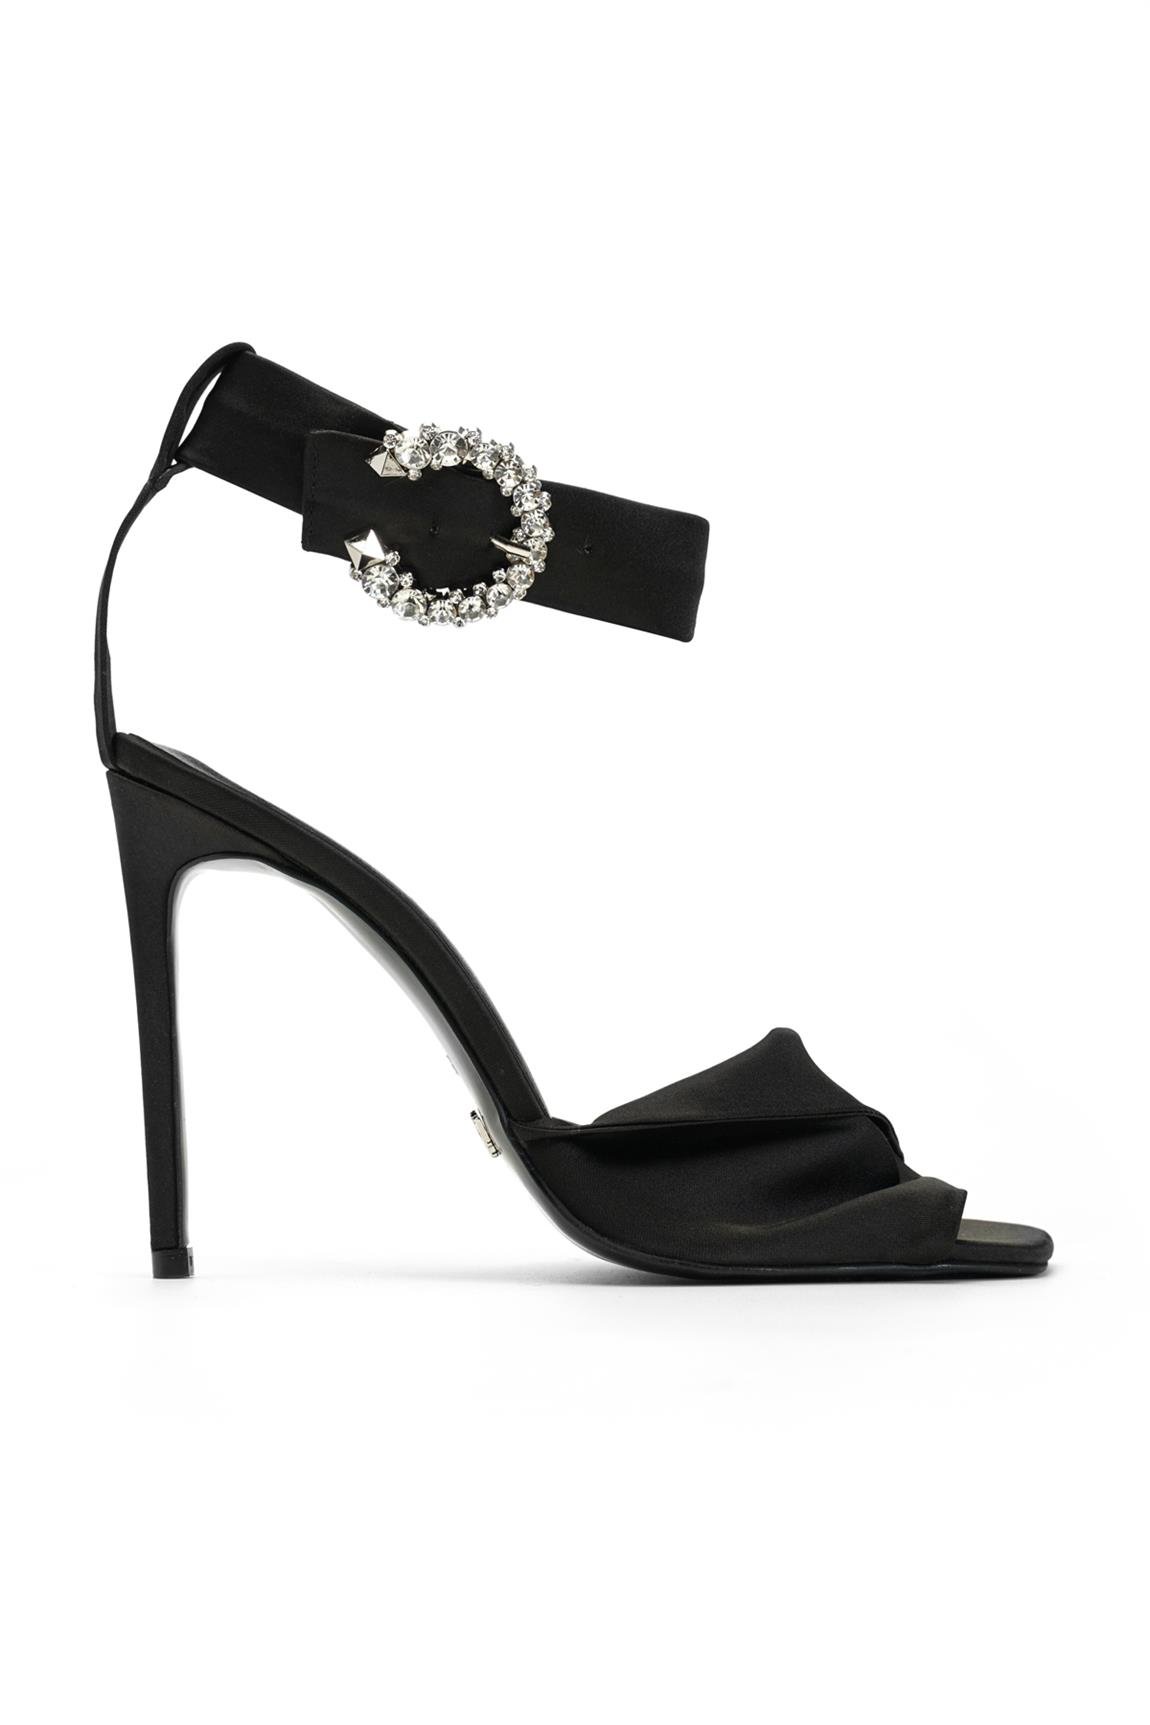 Jabotter Fiona Siyah Saten 10 cm İnce Topuklu Ayakkabı - Jabotter